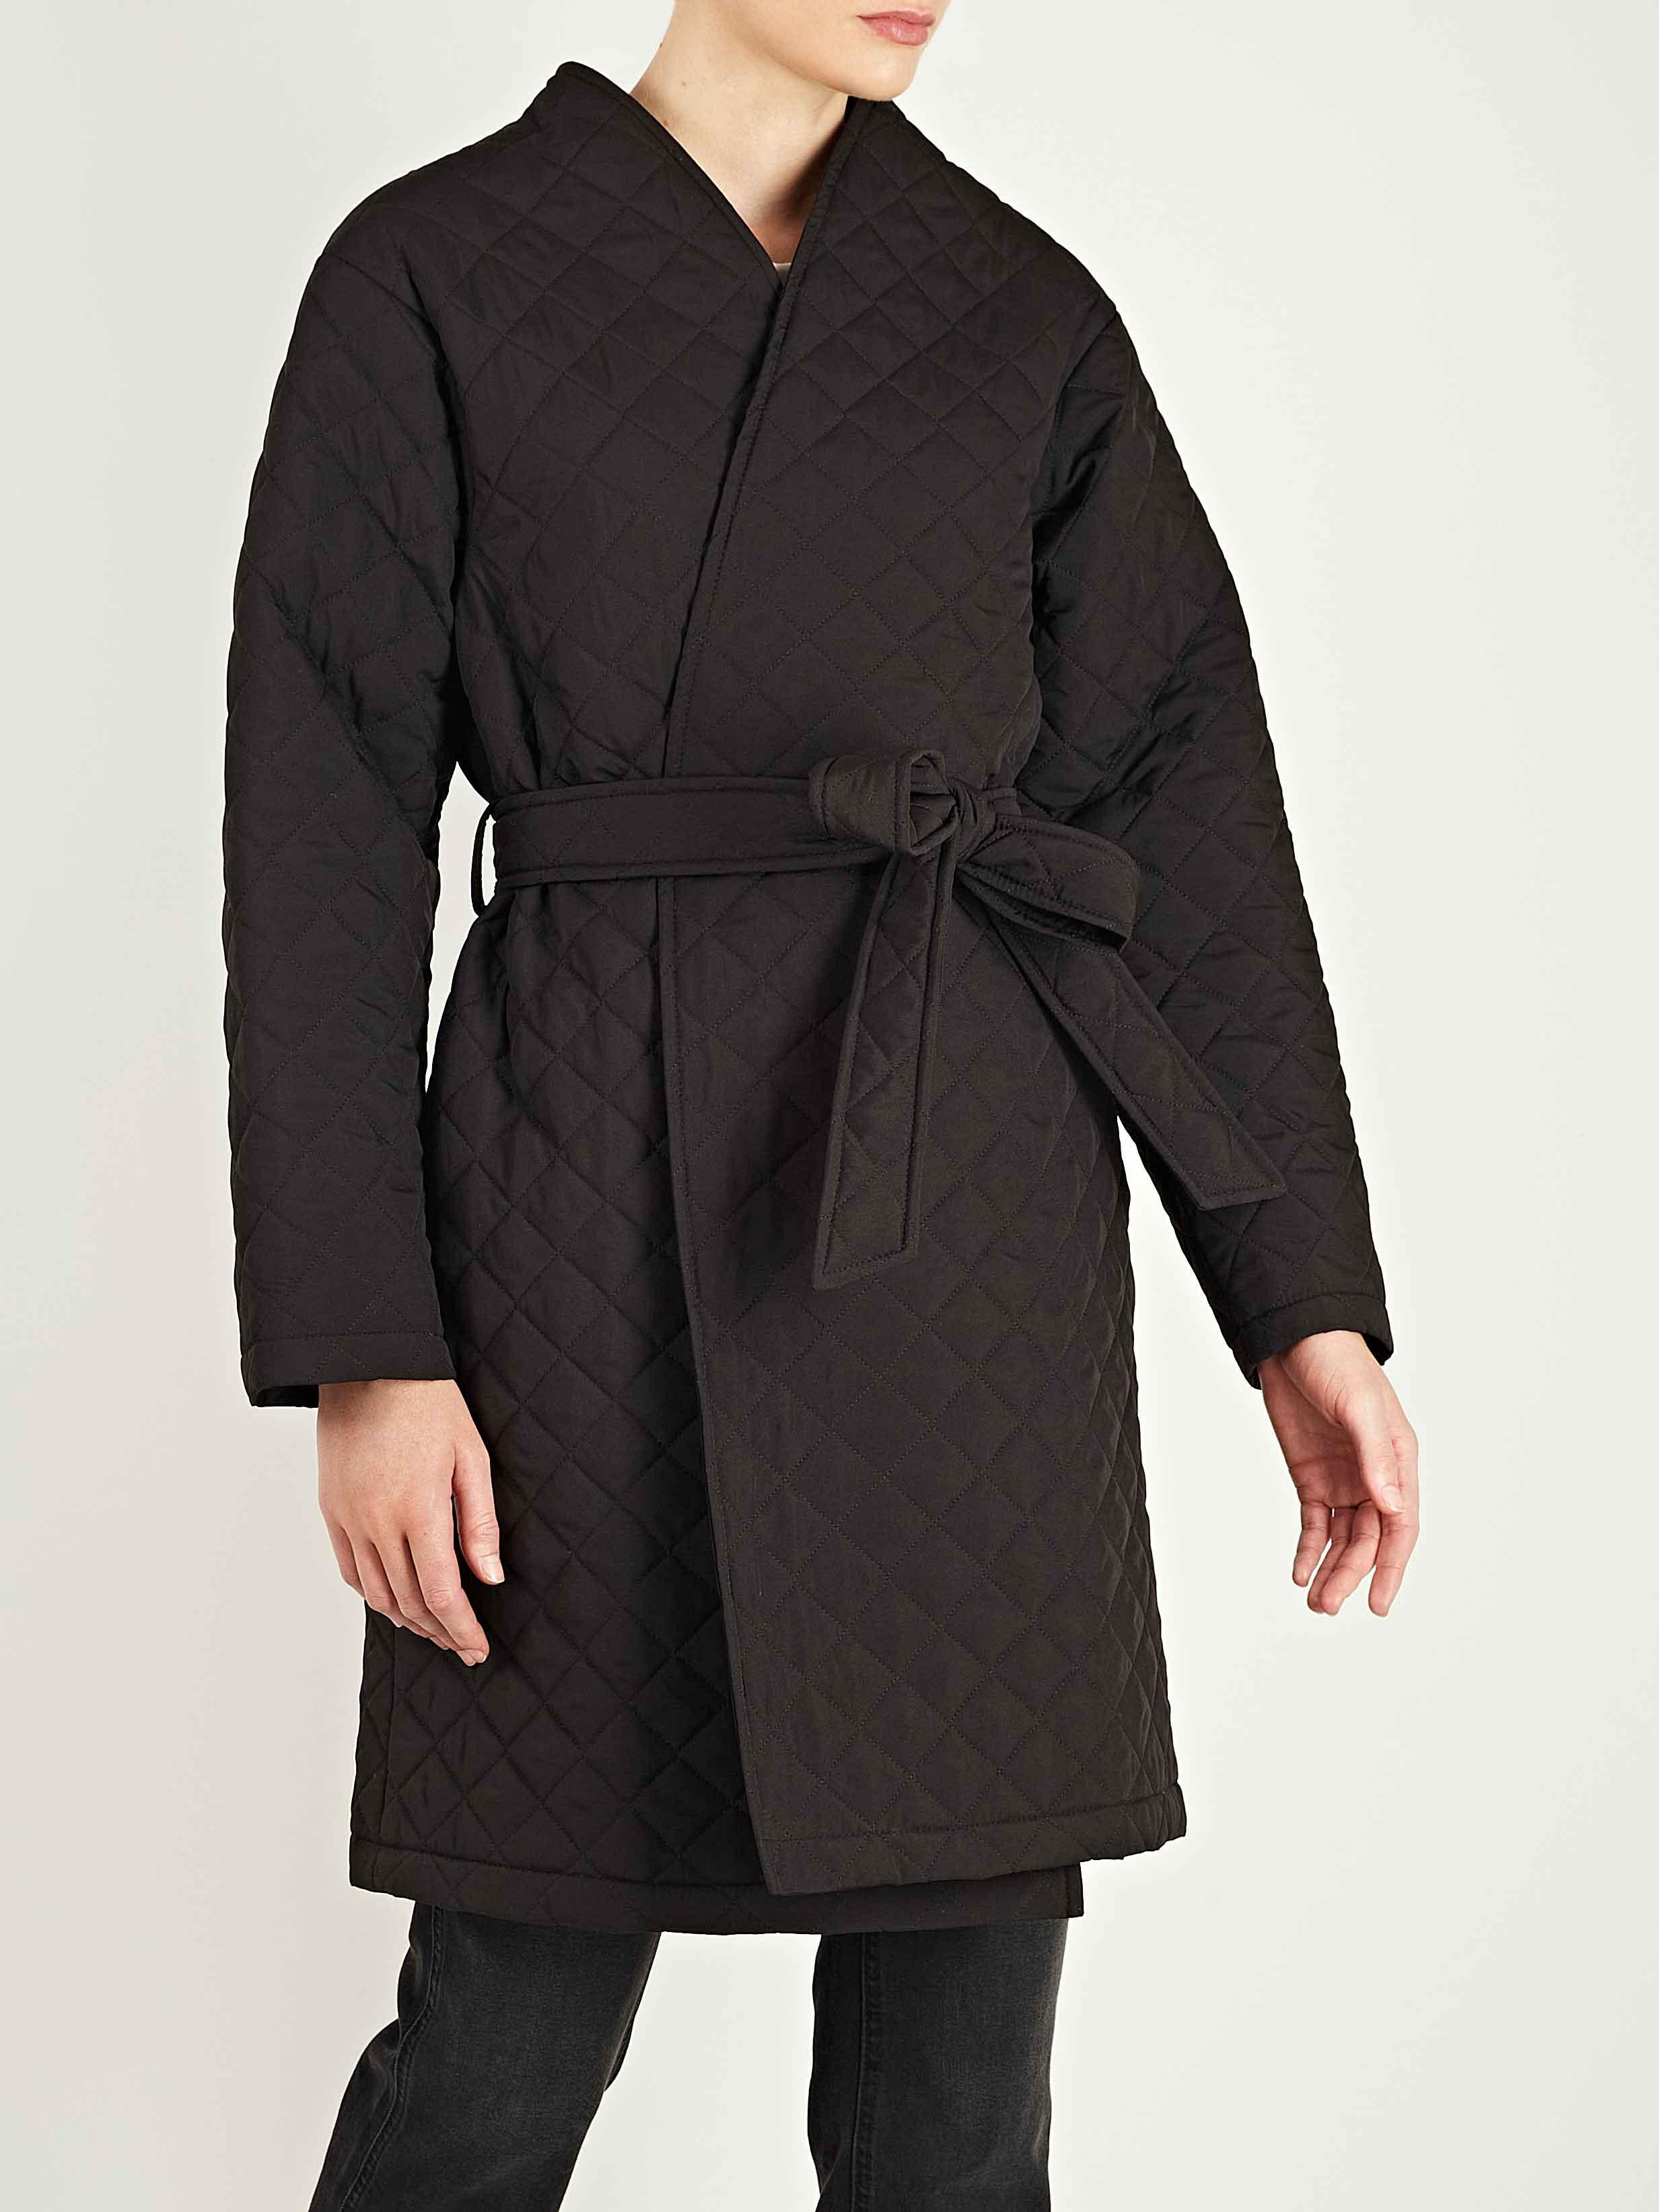 Helene Berman Lynn Quilted Coat in Black | Lyst